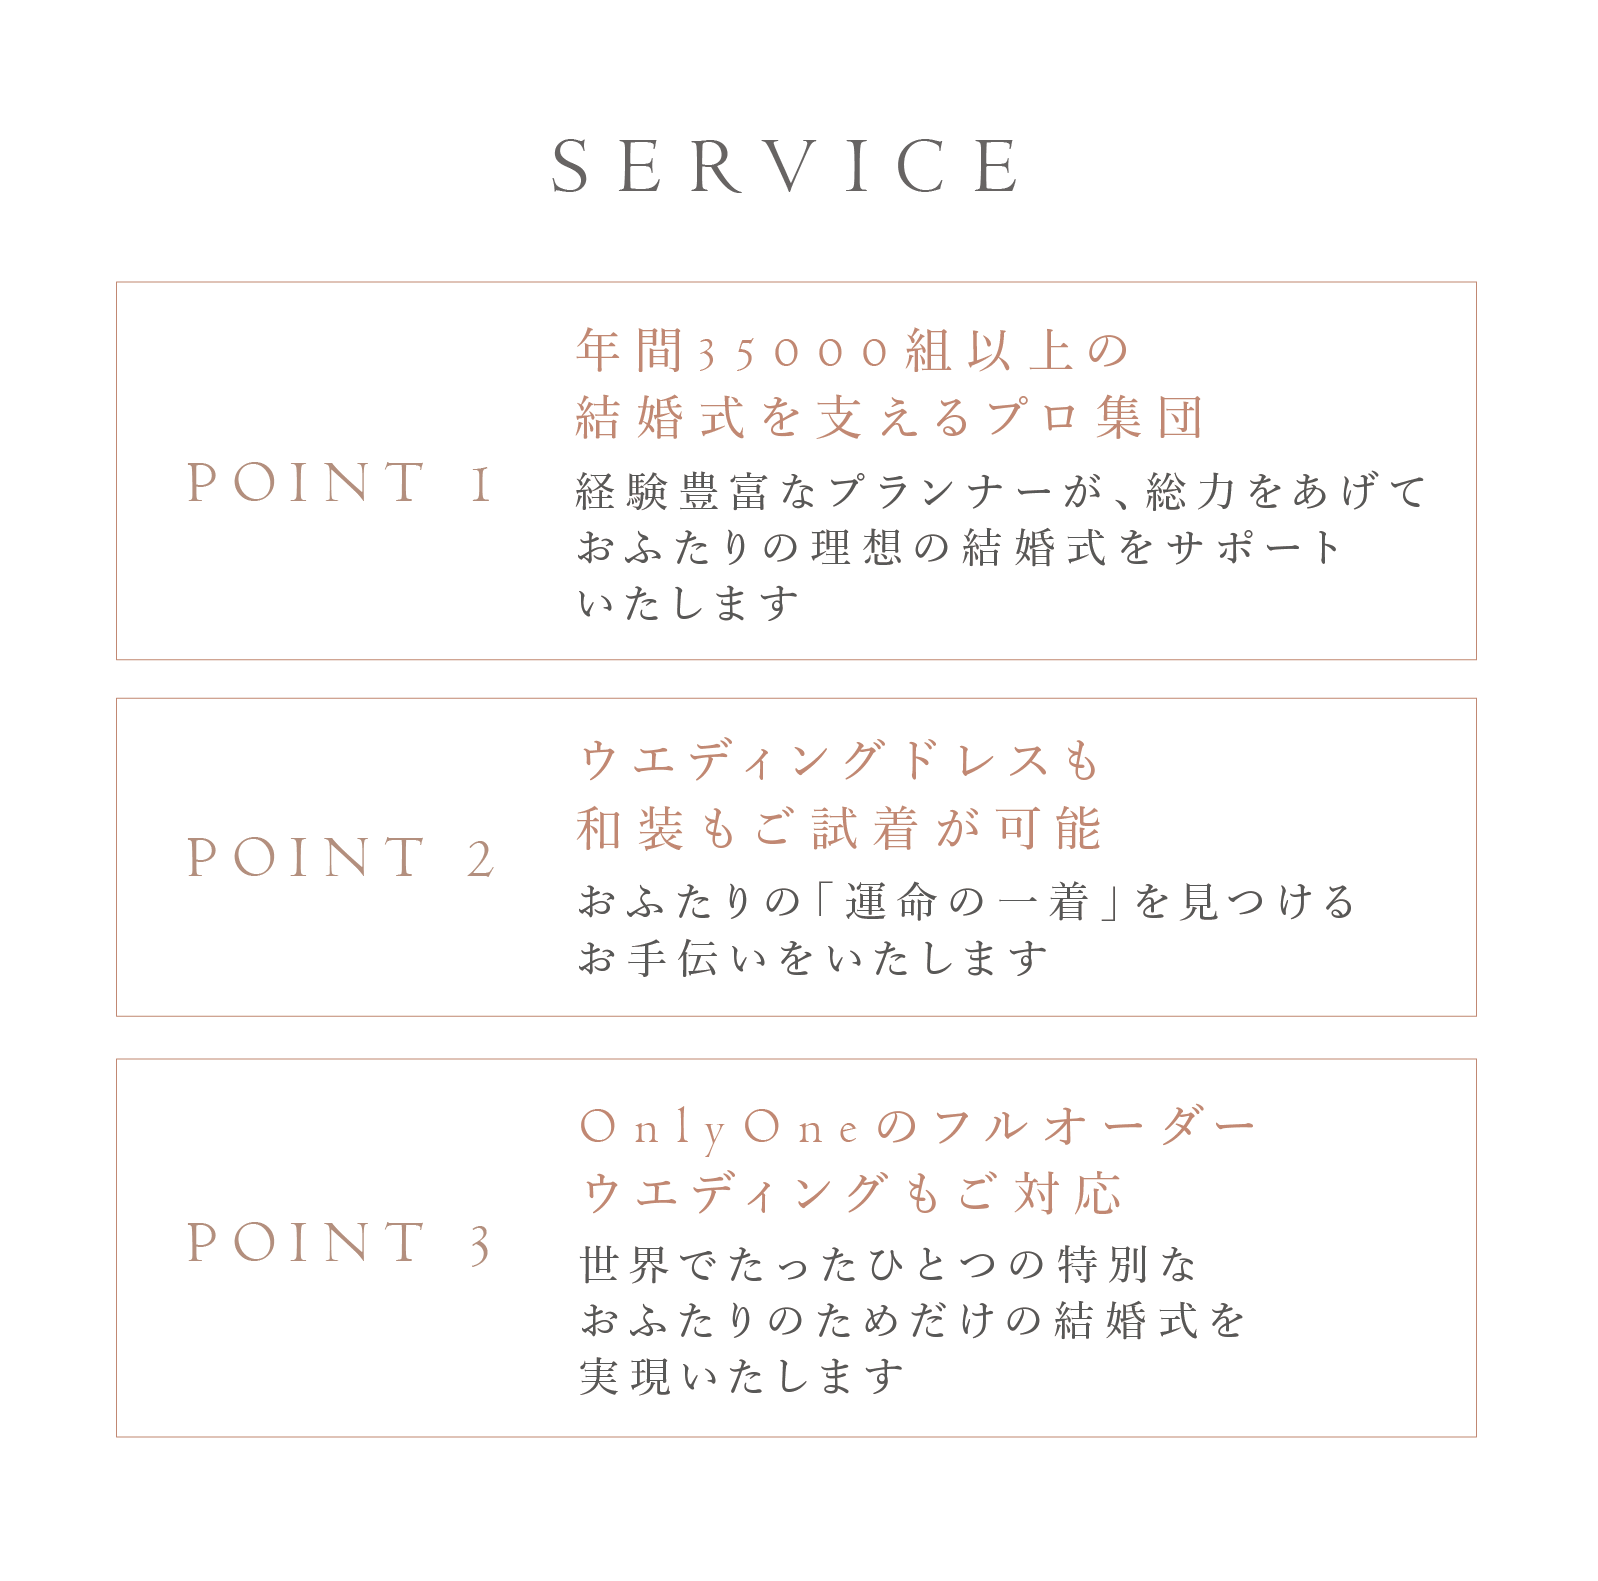 TAKAMI BRIDAL WEDDING DESK KYOTOのサービスの特徴 スマートフォン用の画像